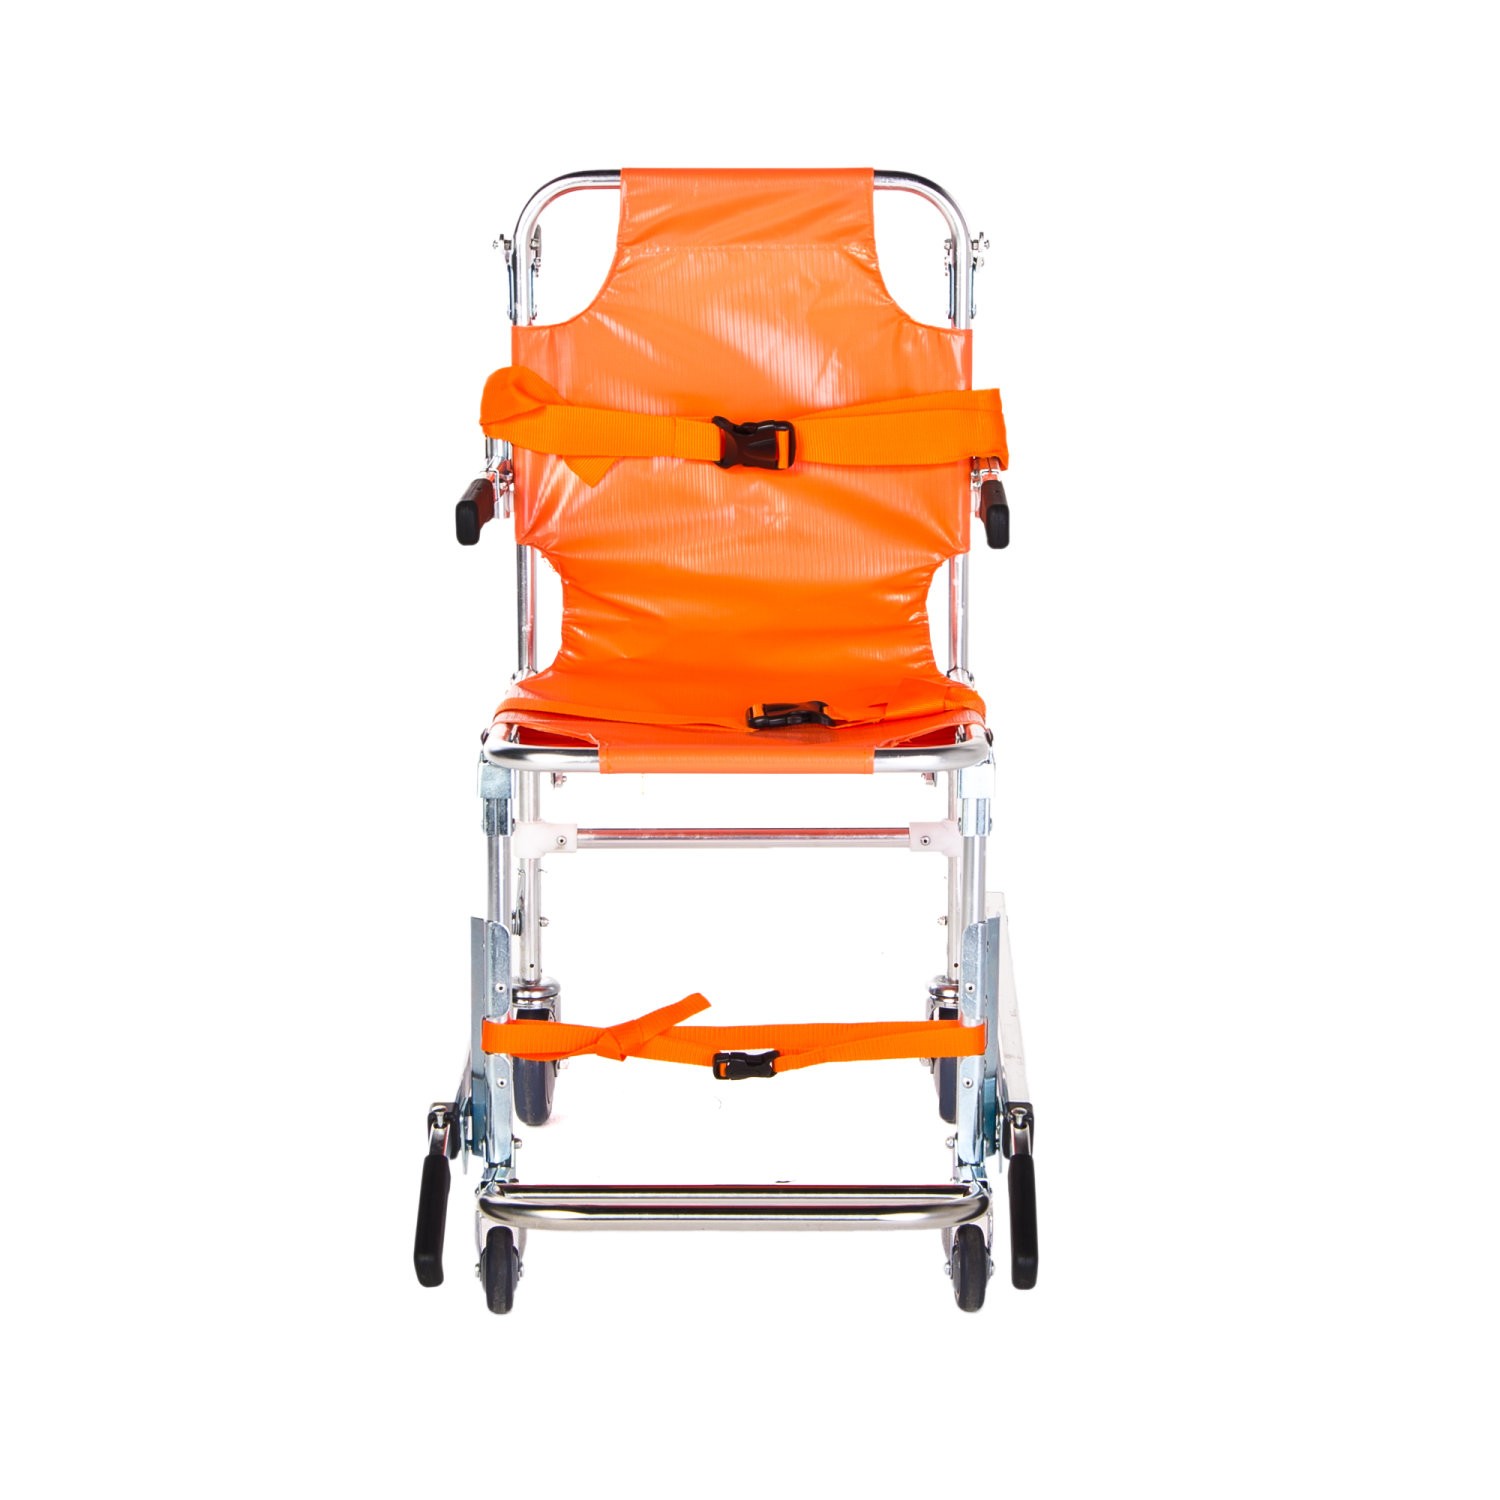 Comfort Plus Merdiven Sedyesi (Hasta Transfer Sandalyesi)